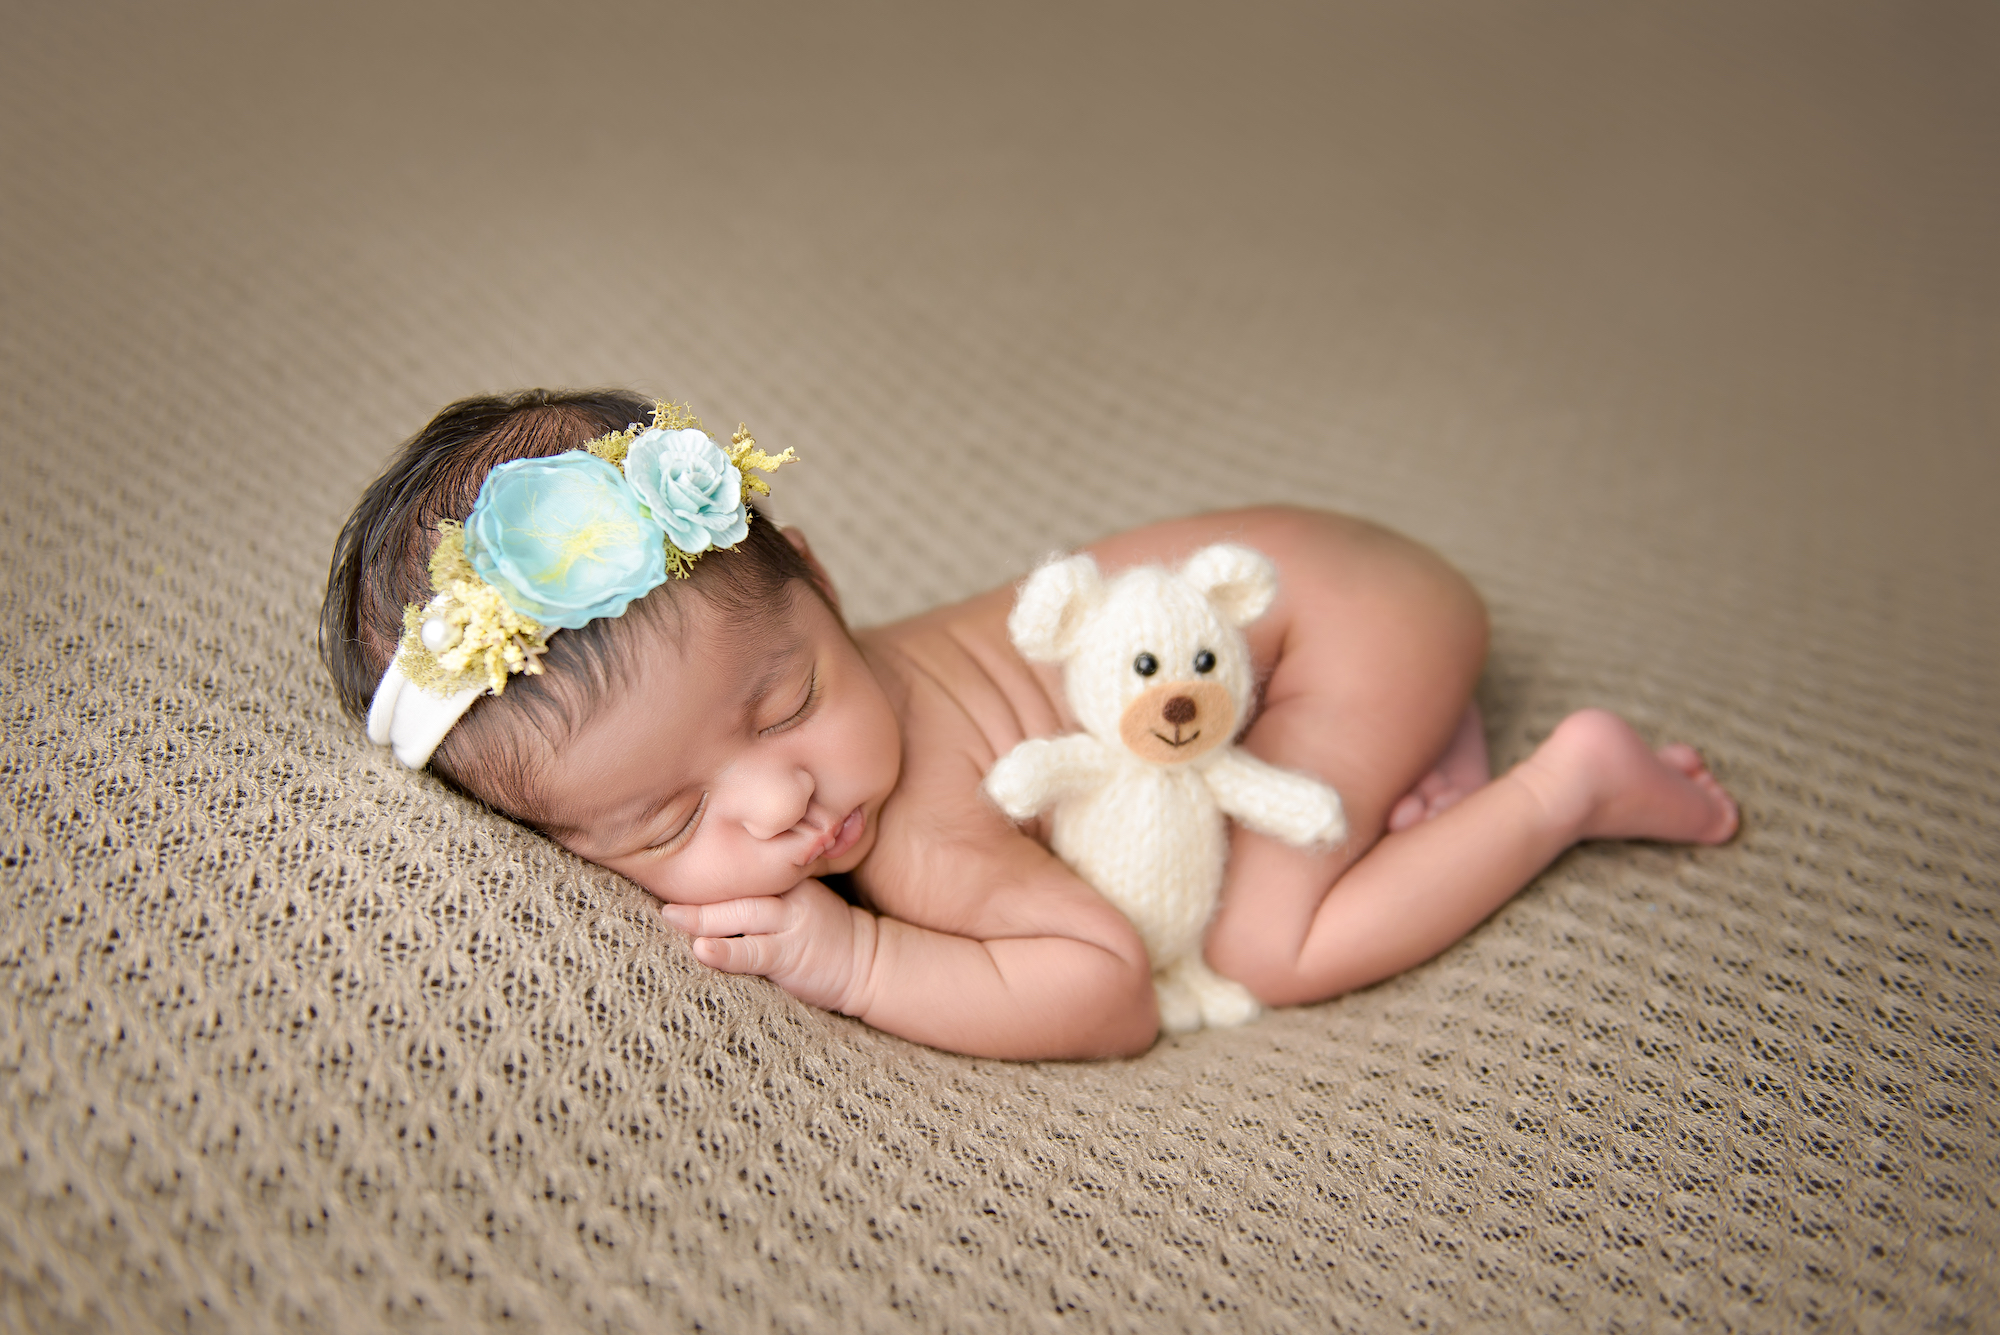 Newborn Photography Naked With Teddy Bear